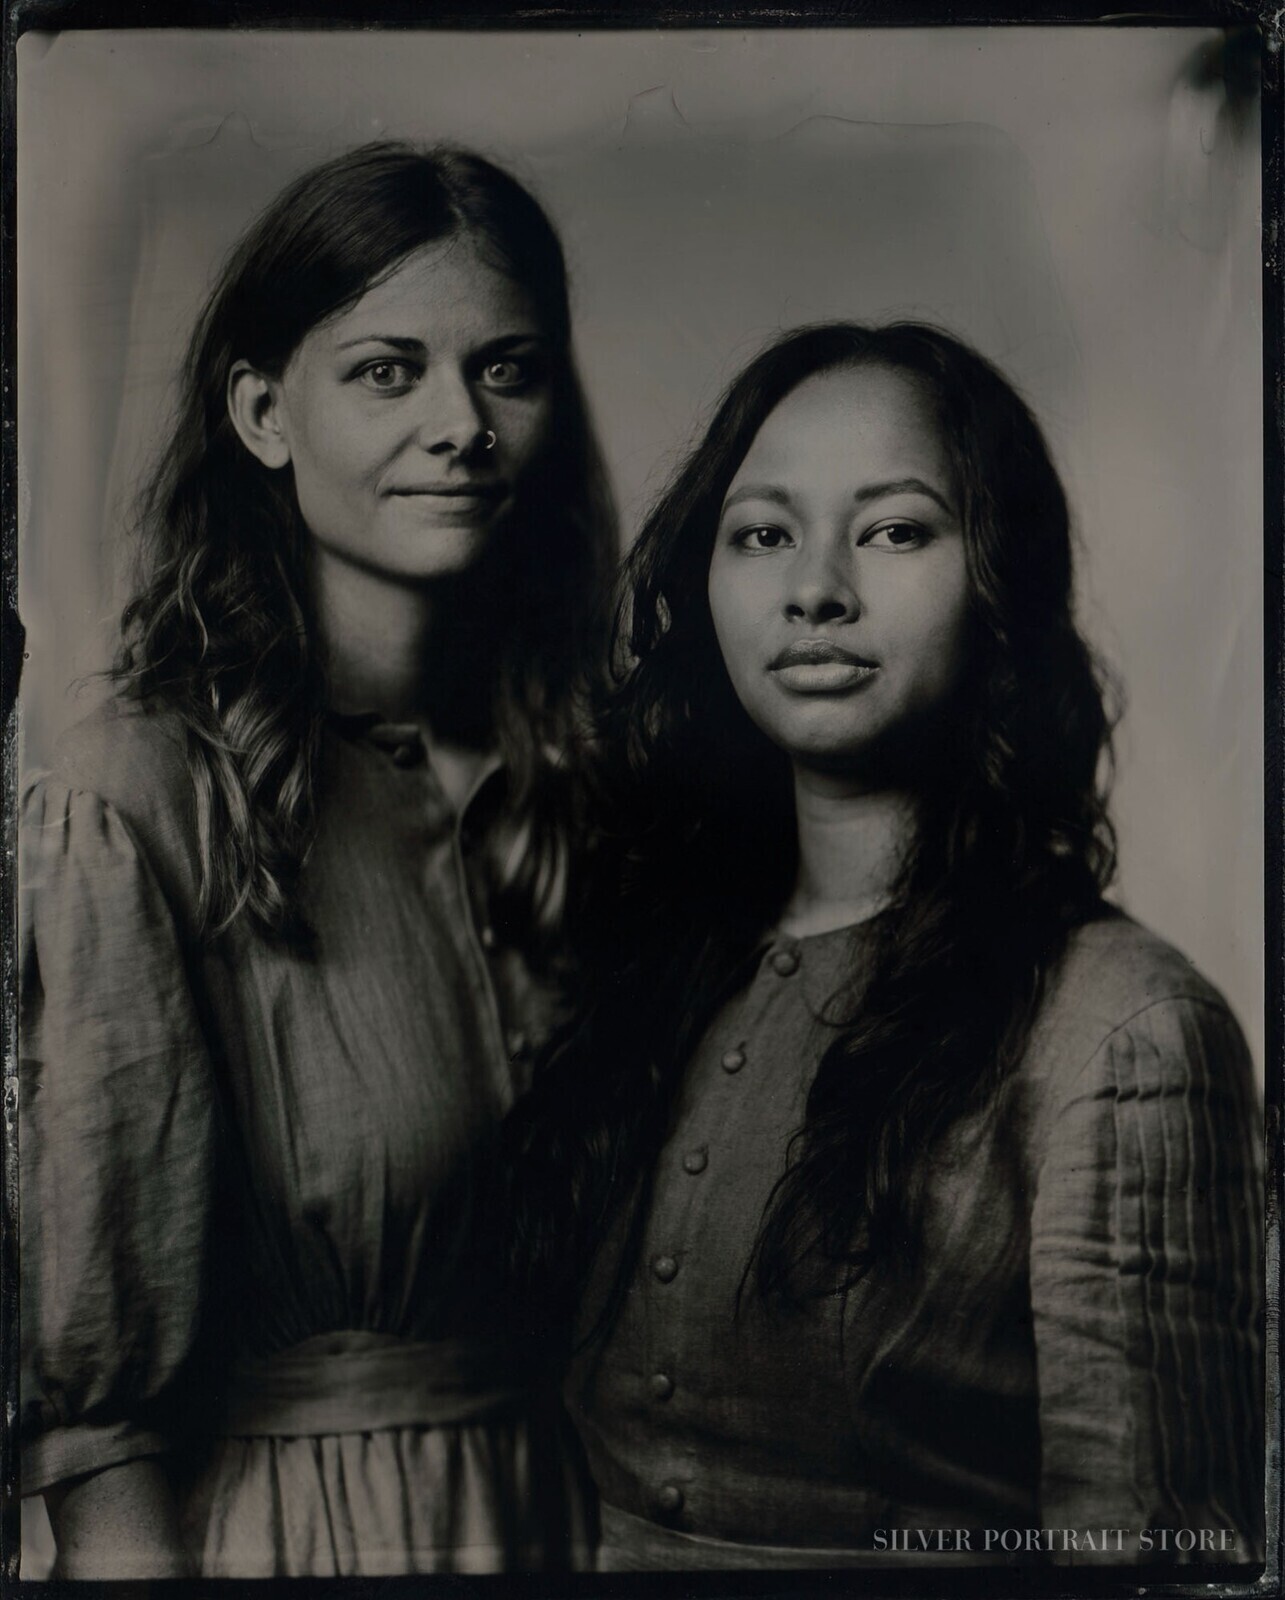 Josien & Faye-Silver Portrait Store-Wet plate collodion-Black glass Ambrotype 10 x 12 cm.